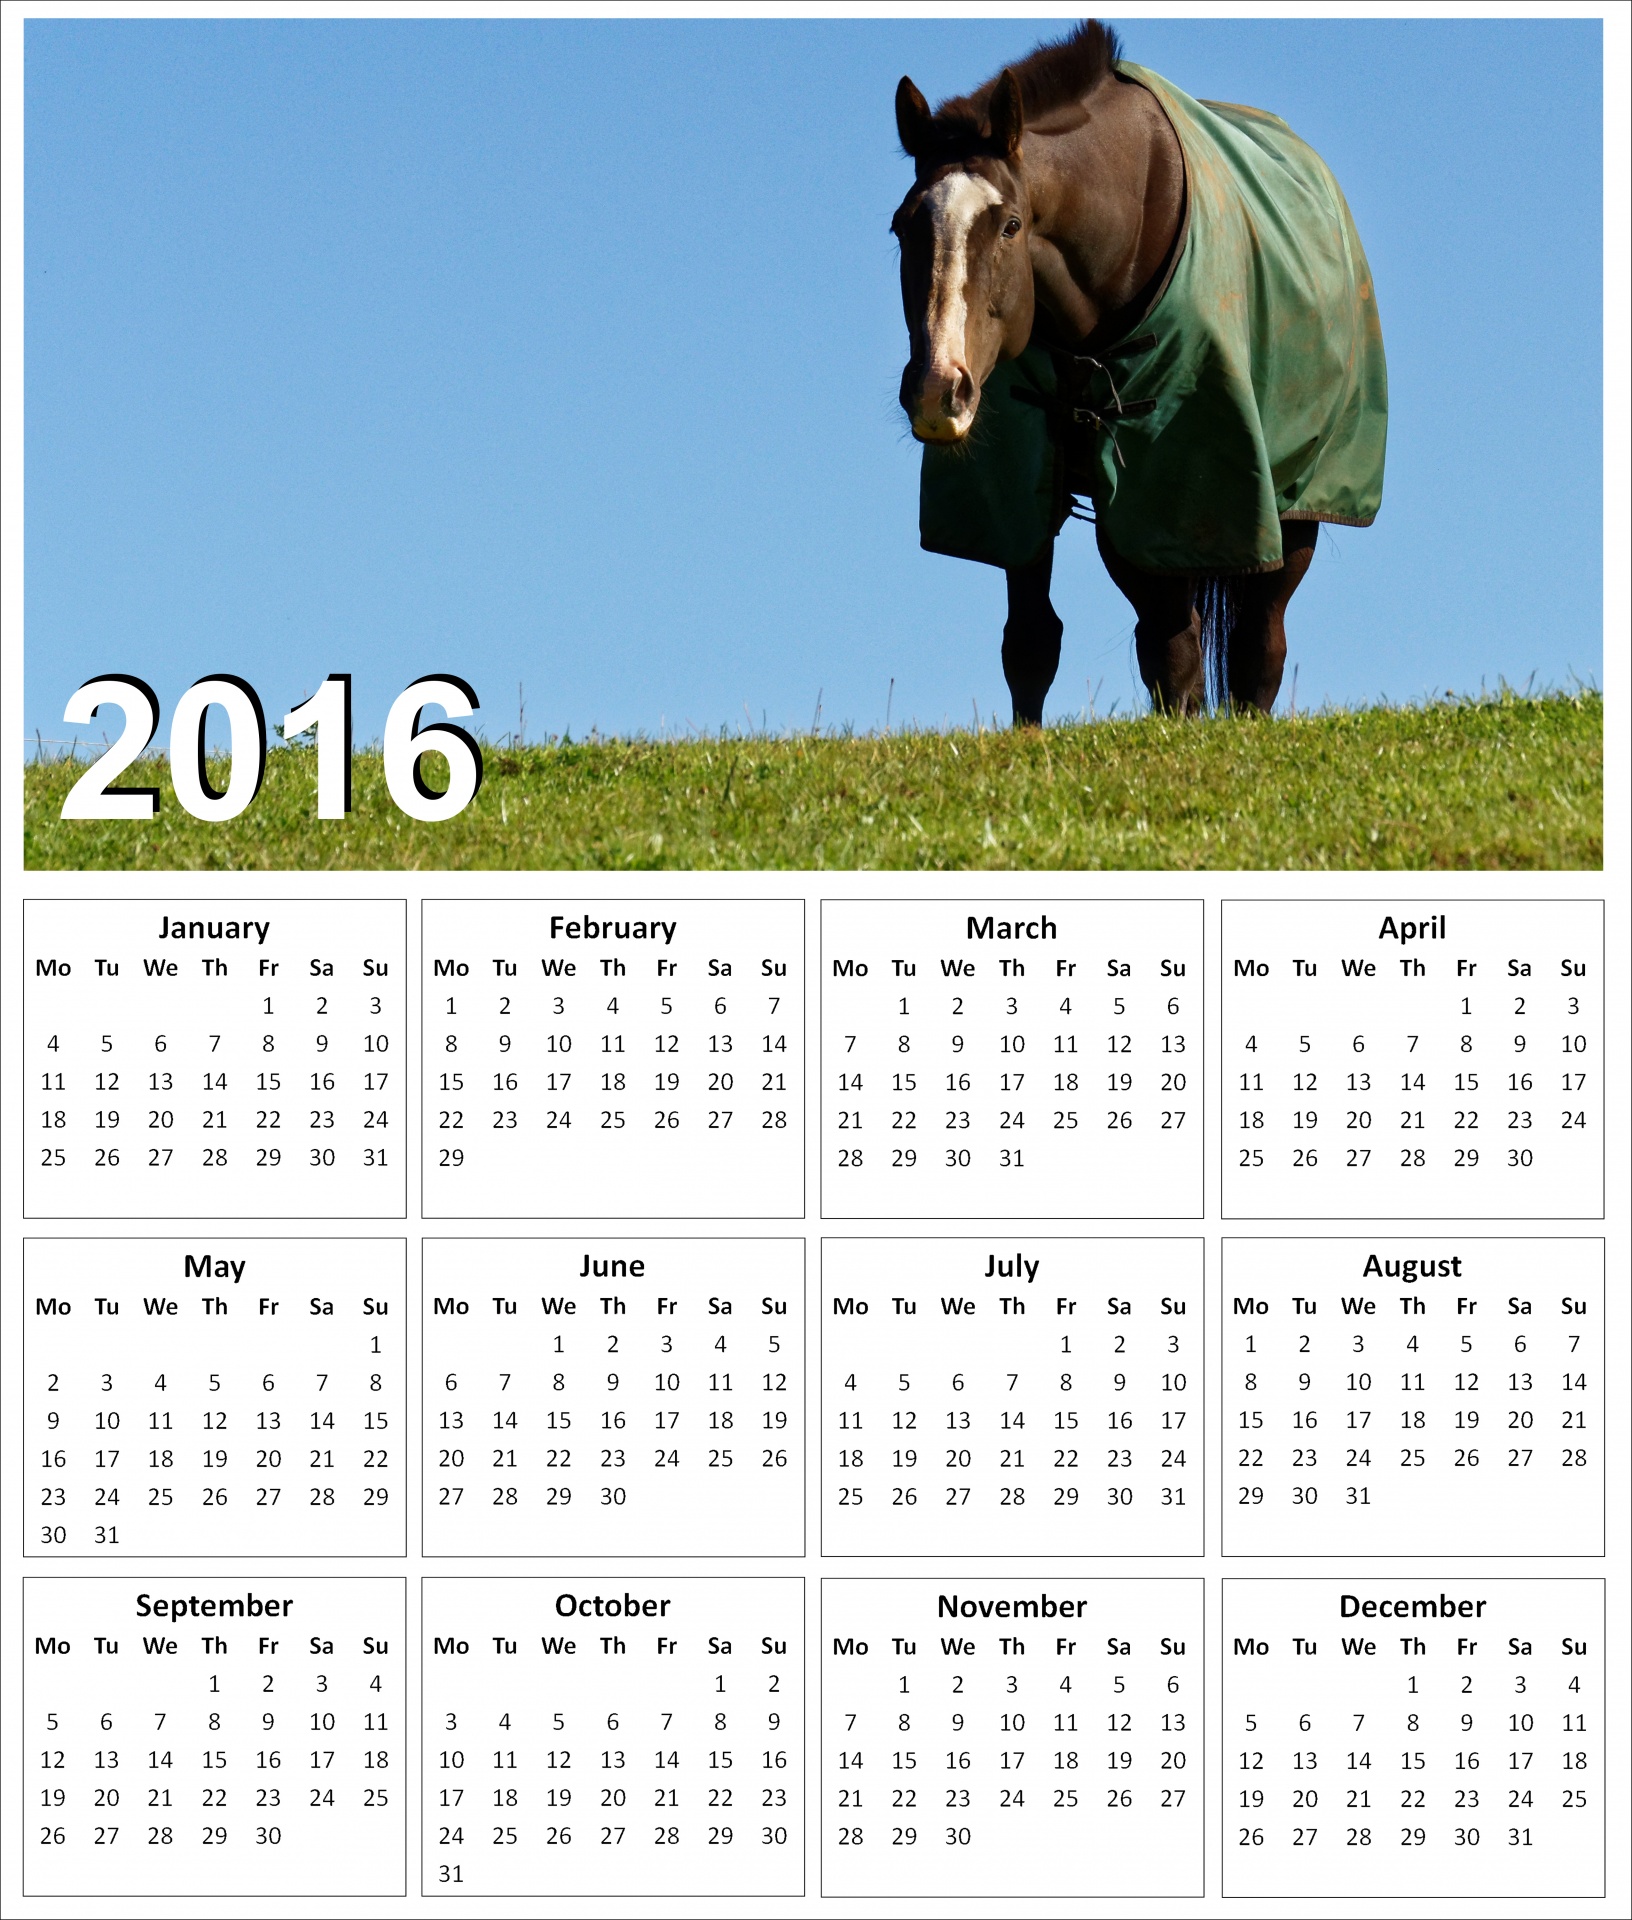 2016 Horse Calendar